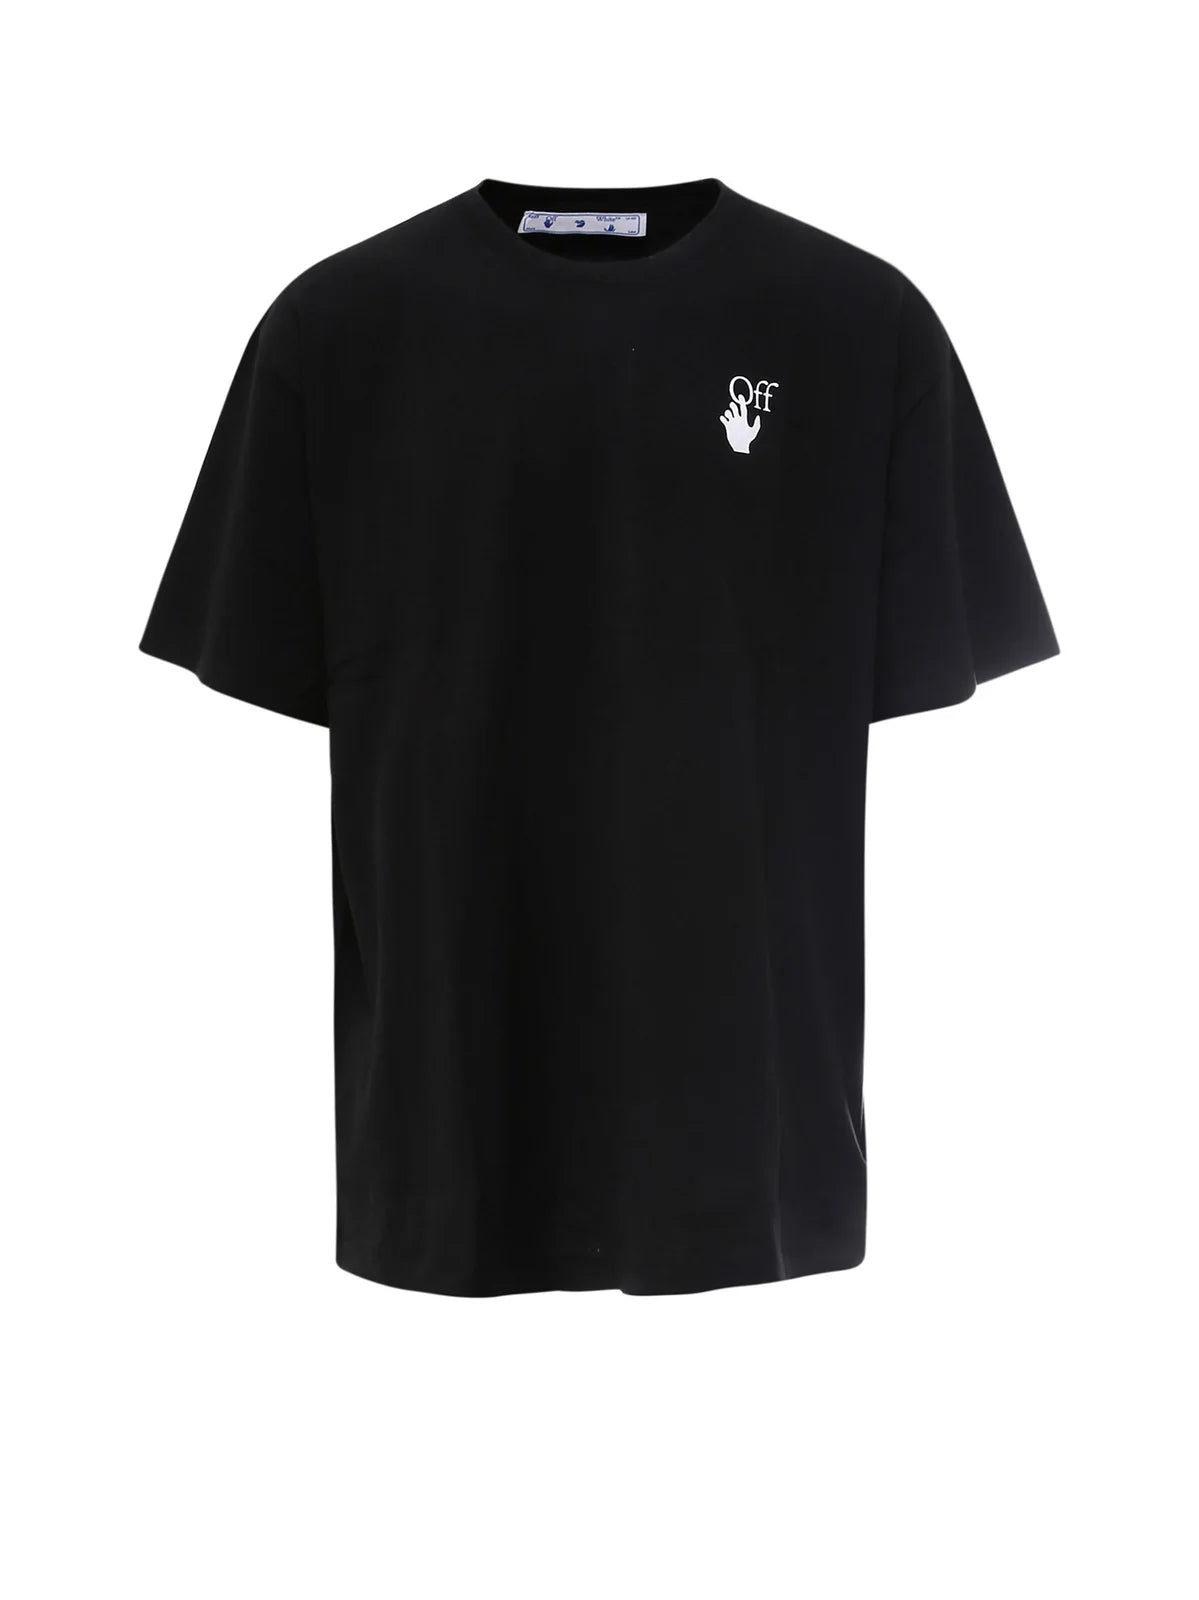 Off-White Gradient Arrows Print T-Shirt